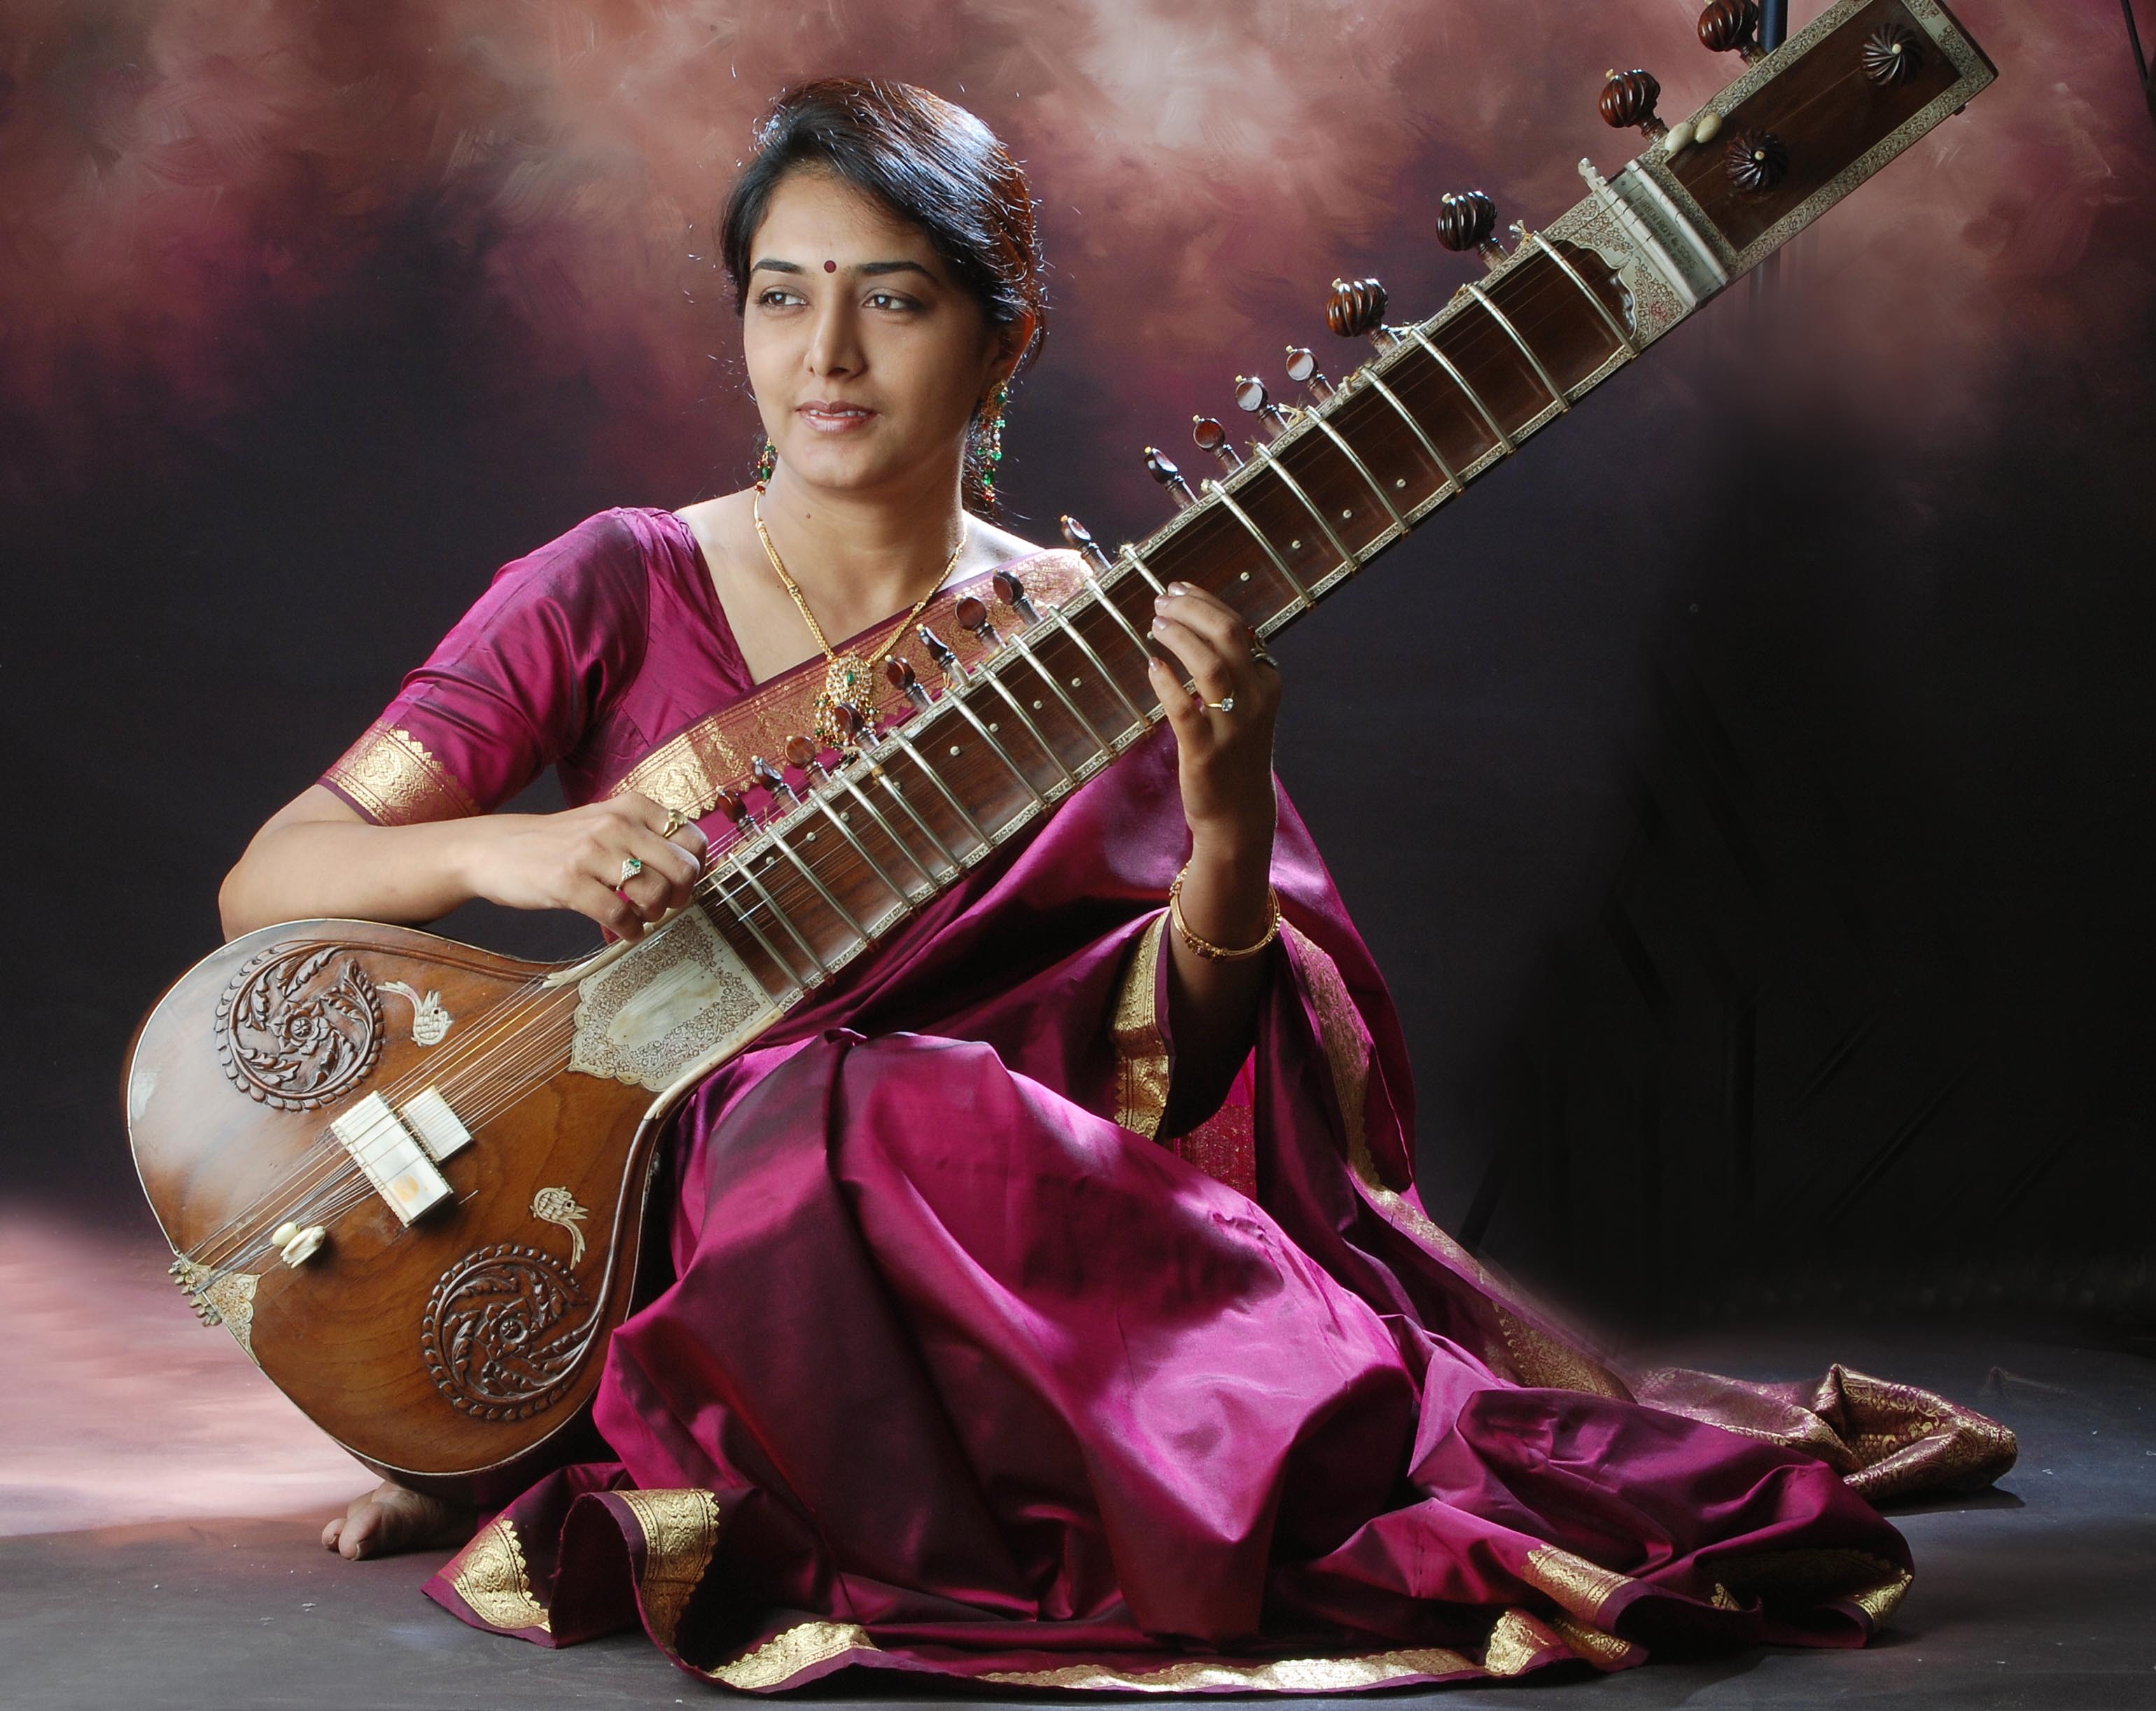 Musiqiy net. Индийский инструмент ситар. Индийский народный инструмент ситар. Ситар музыкальный инструмент. Струнные инструменты Индии ситар.